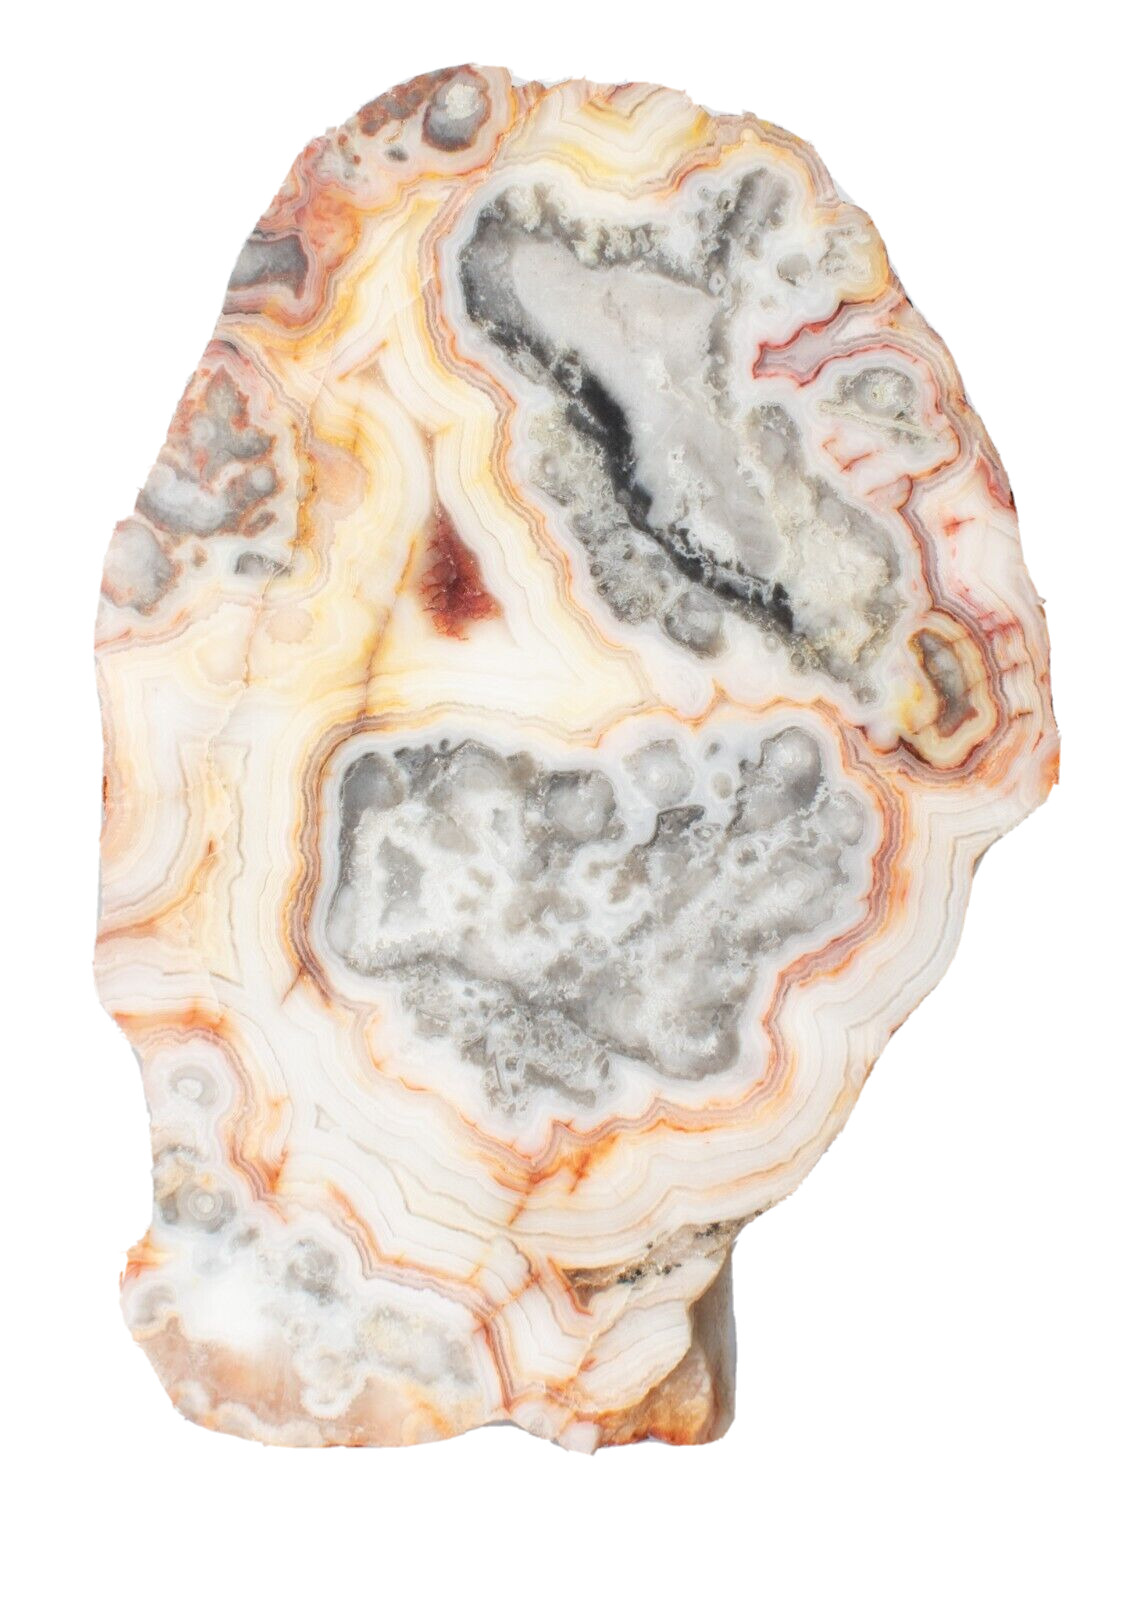 Polished Western Australian Crazy Lace Agate Slice Stone Slab Pilbara C120423